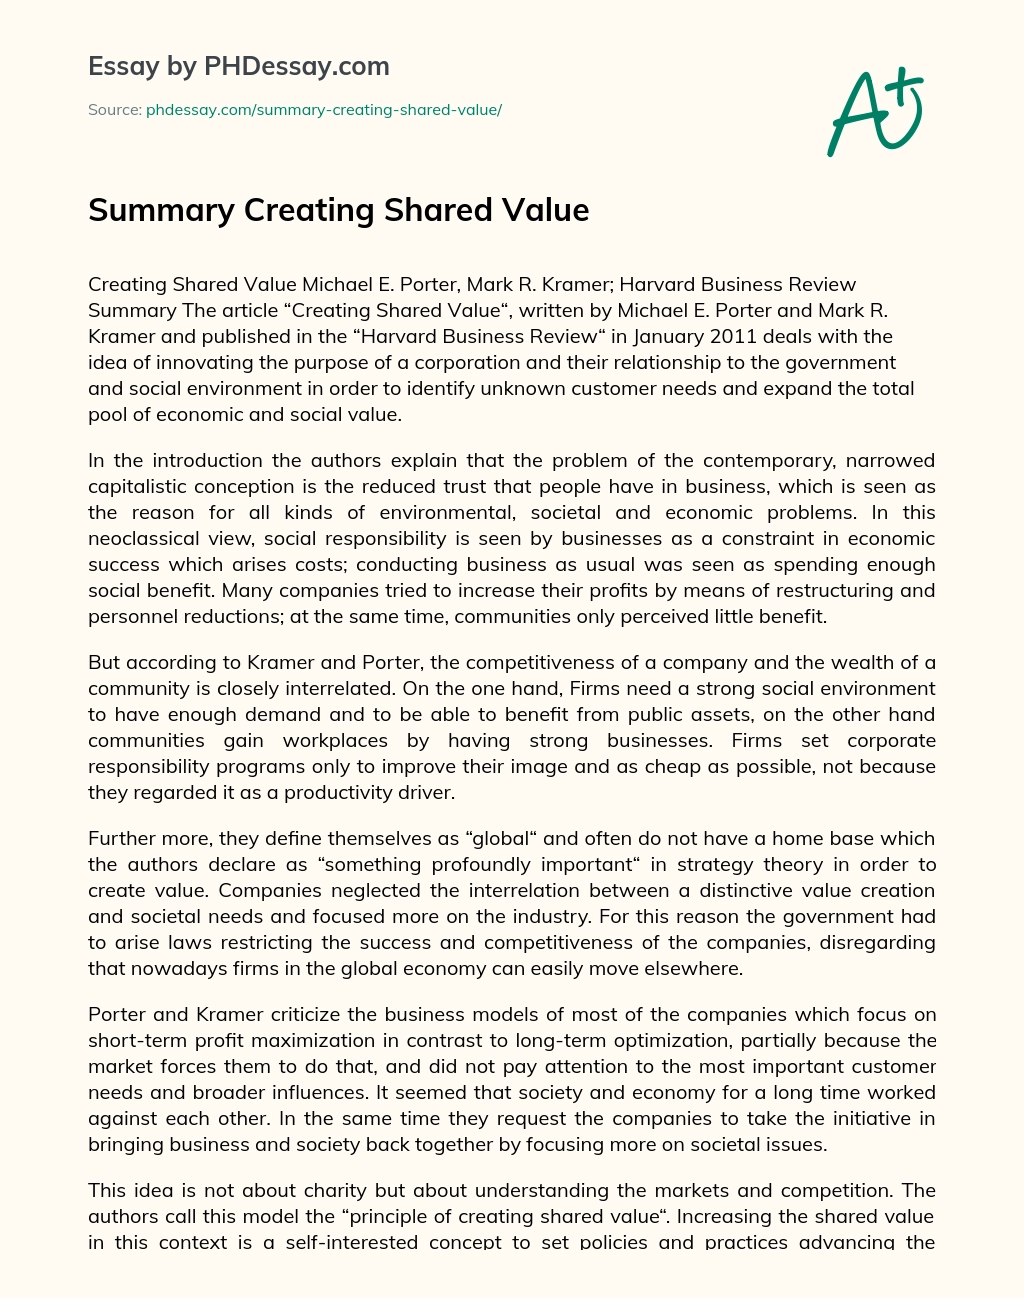 Summary Creating Shared Value essay